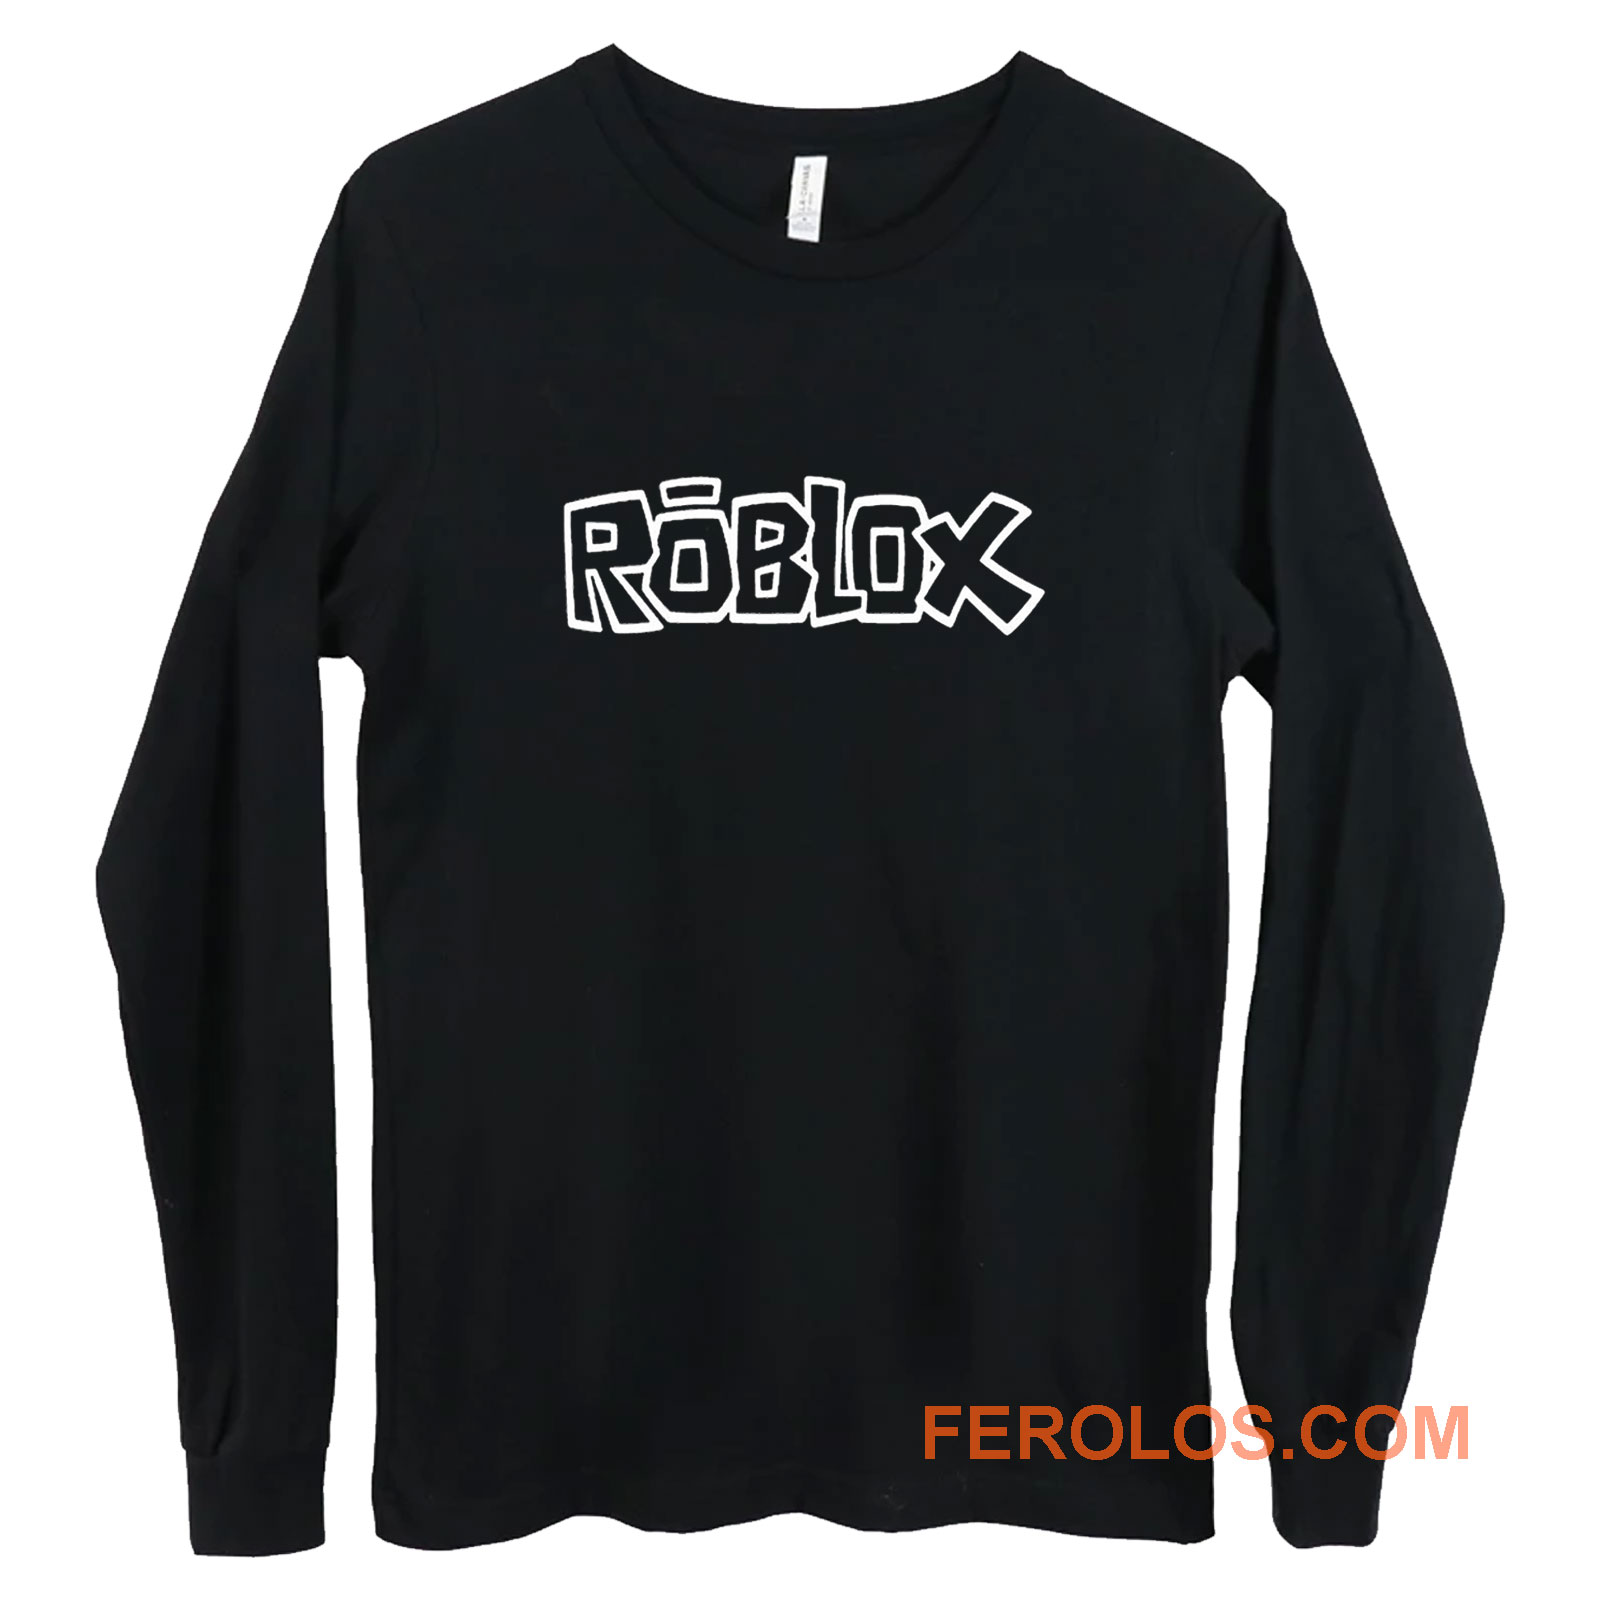 Roblox Long Sleeve Ferolos Com - michael jordan roblox shirt